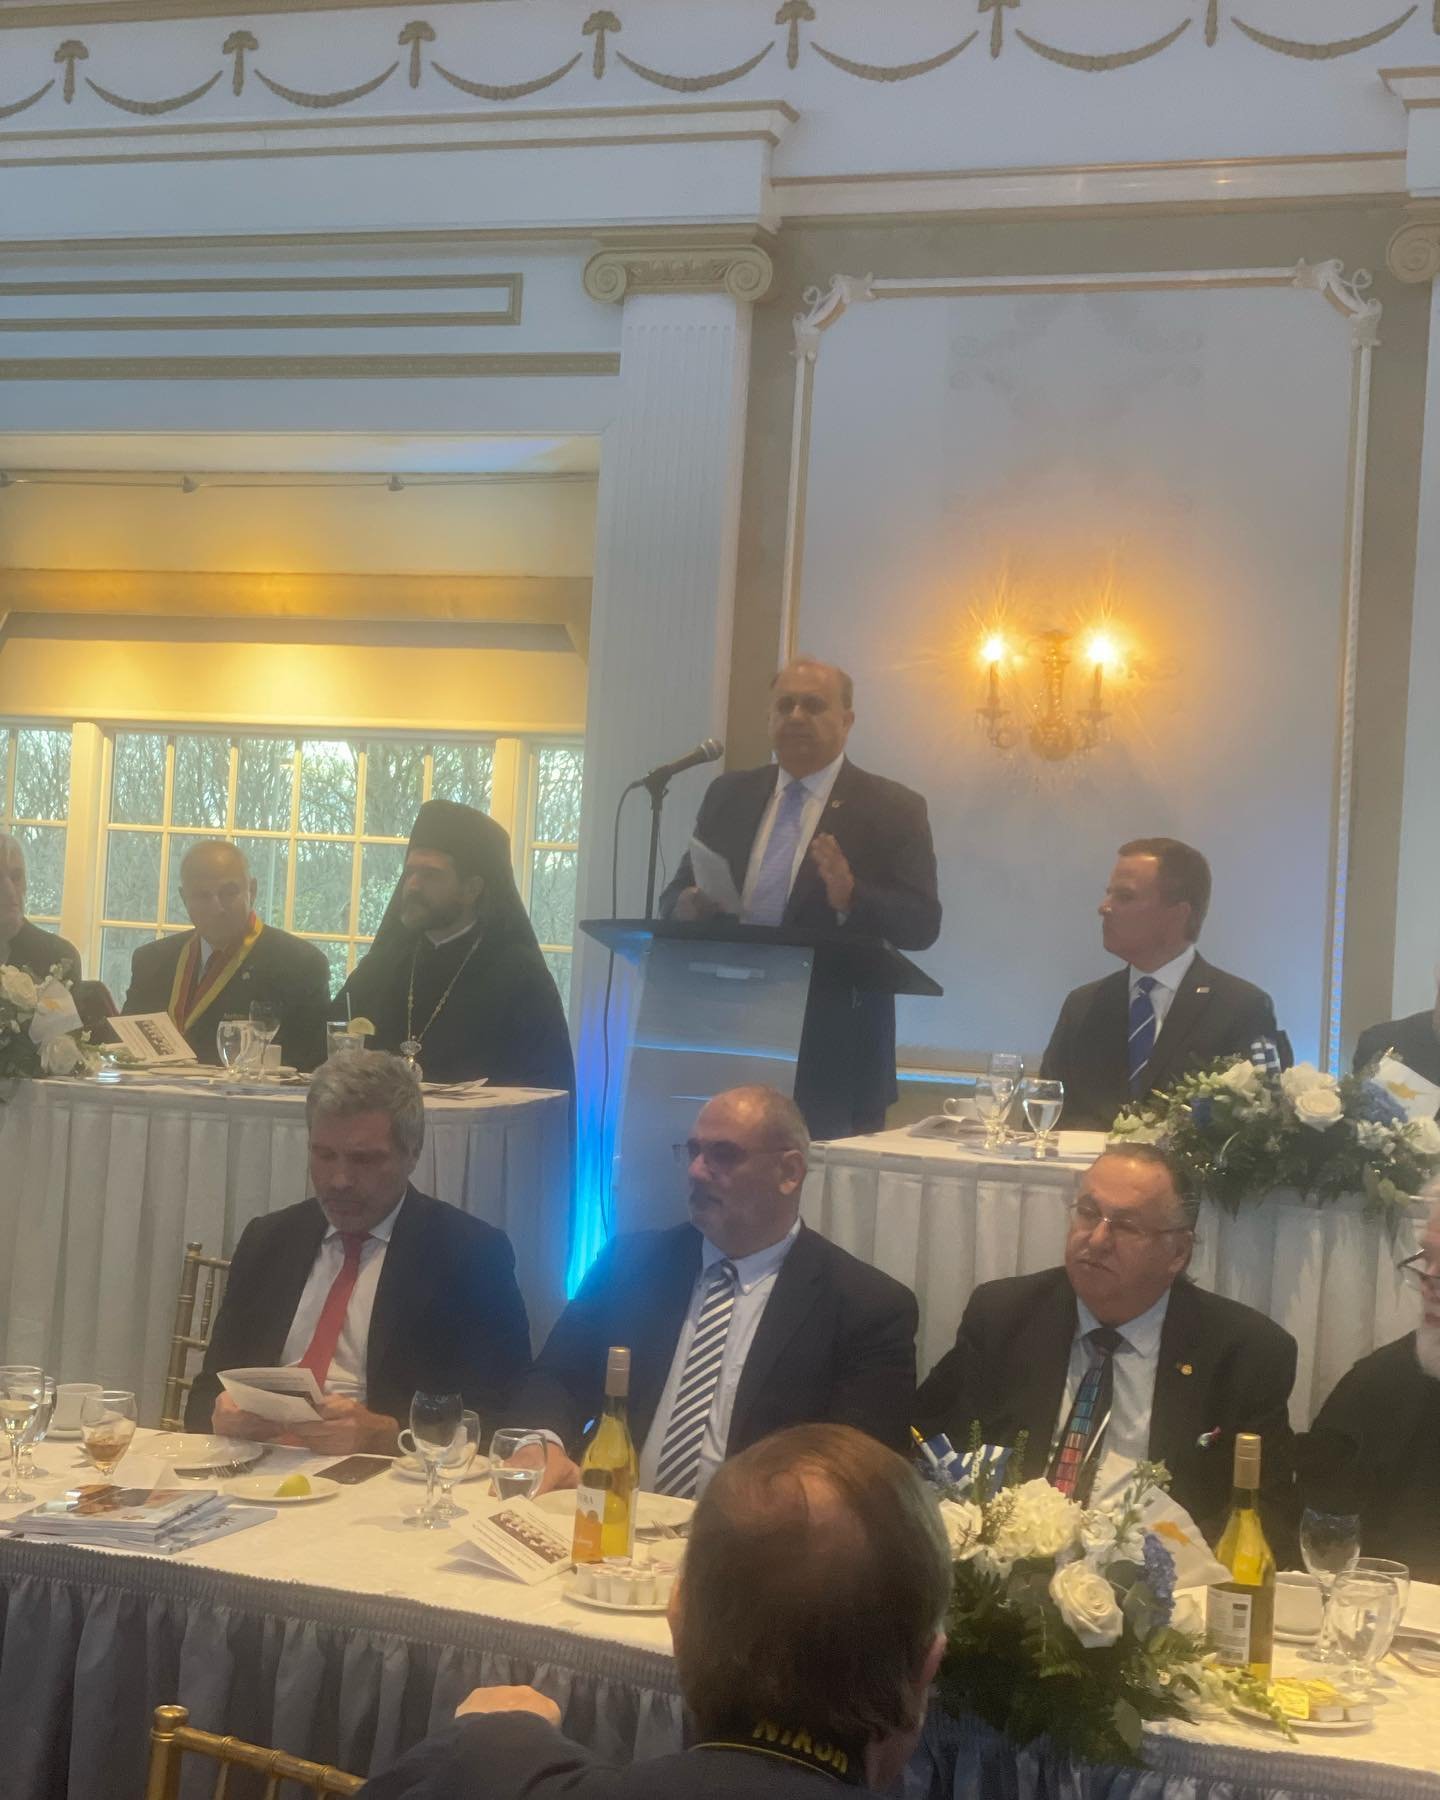  AHI President Larigakis providing greetings at the Eleftheria Grand Banquet.  